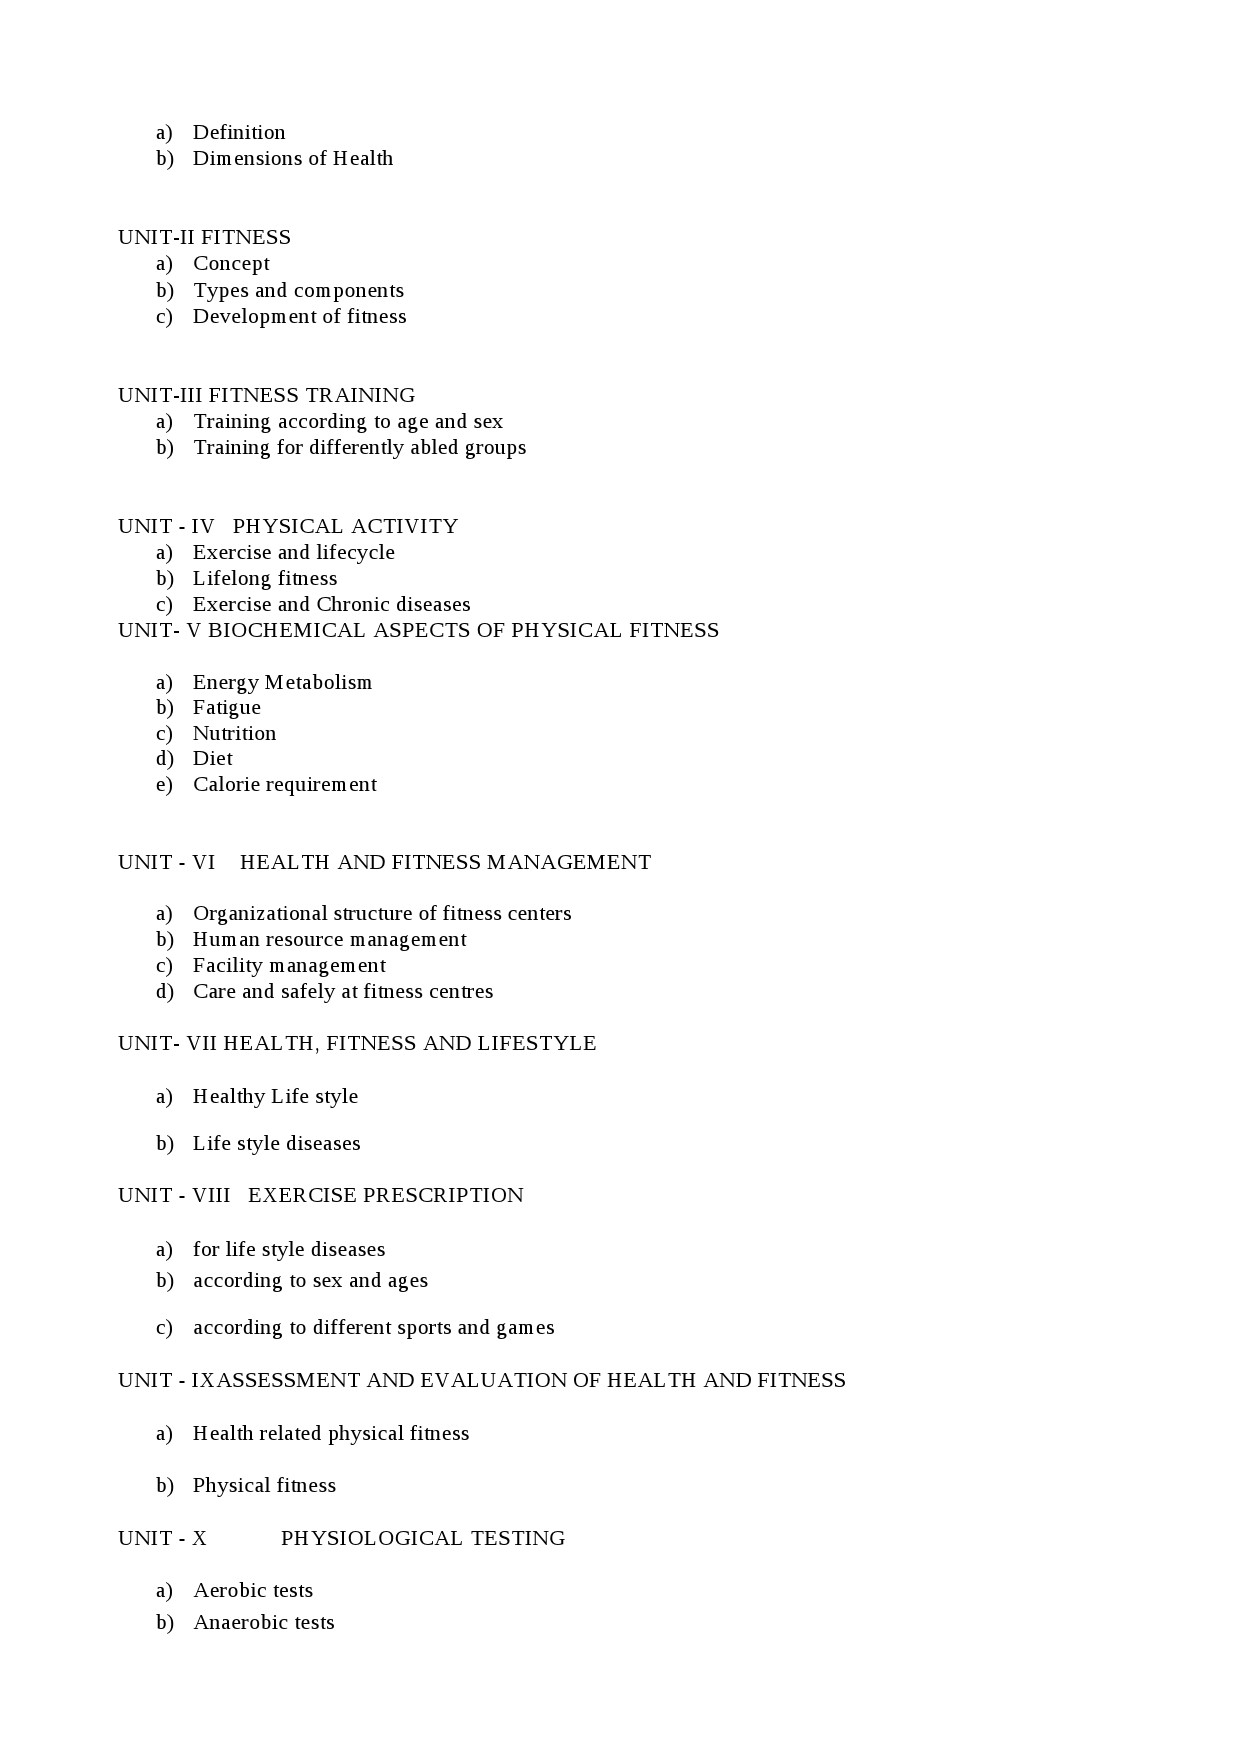 Science Syllabus for Kerala PSC 2021 Exam - Notification Image 29